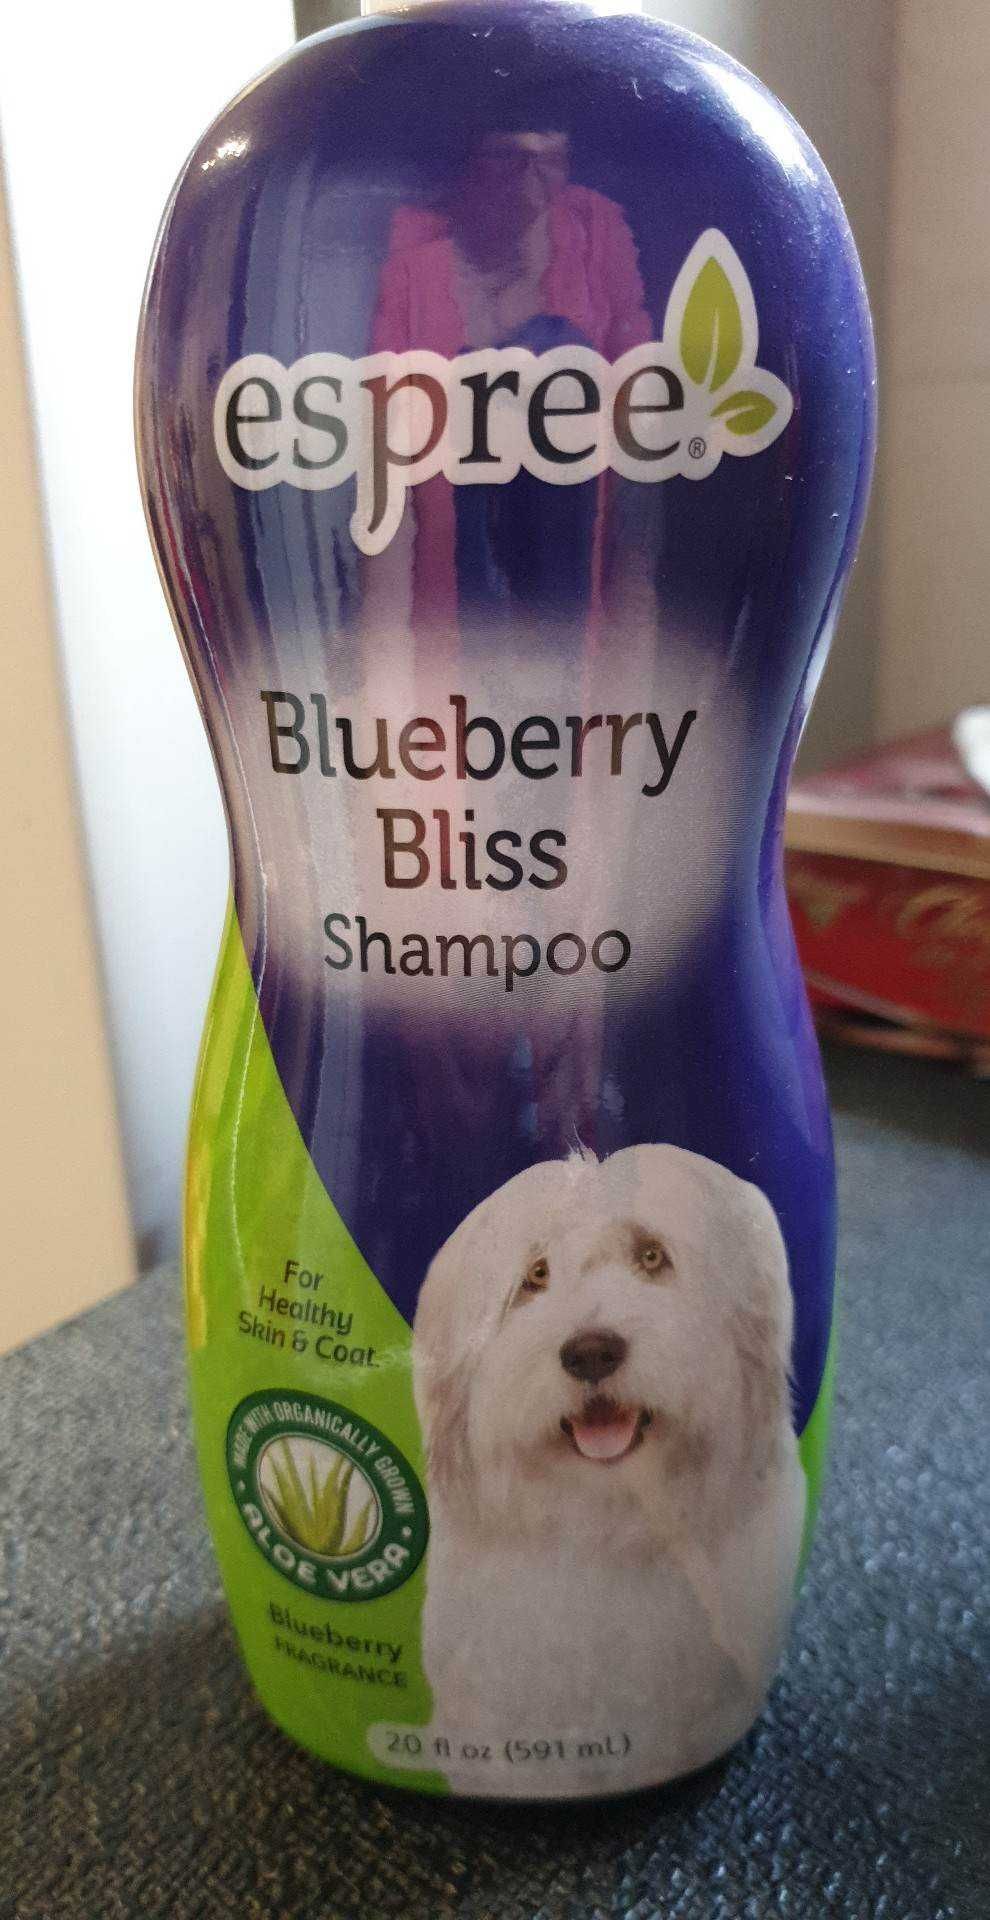 Espree Blueberry Bliss delikatny szampon jagodowy dla psa, koncentrat